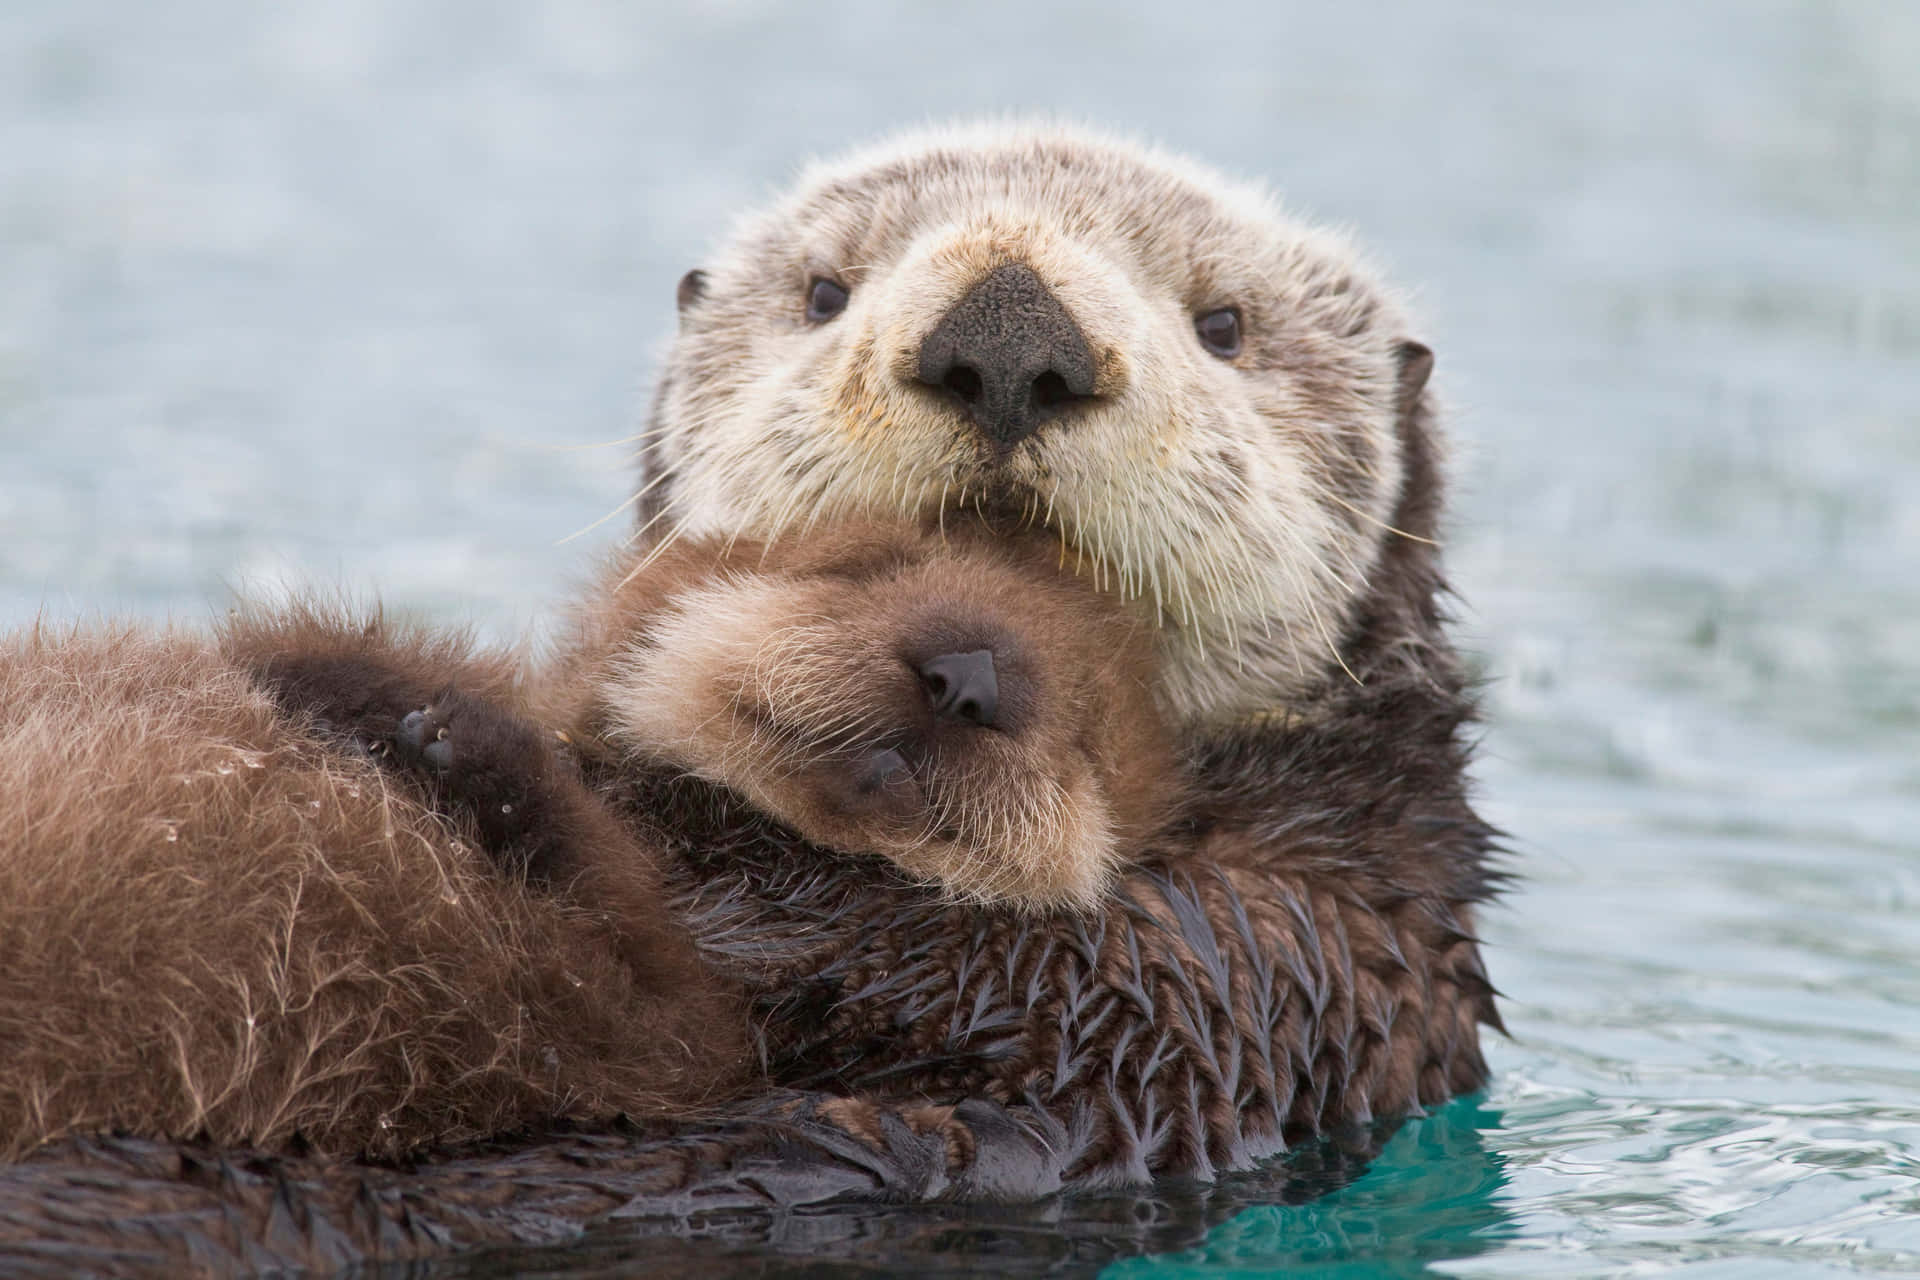 A Playful Sea Otter Enjoying His Swim In The Vibrant Aquatic World. Background